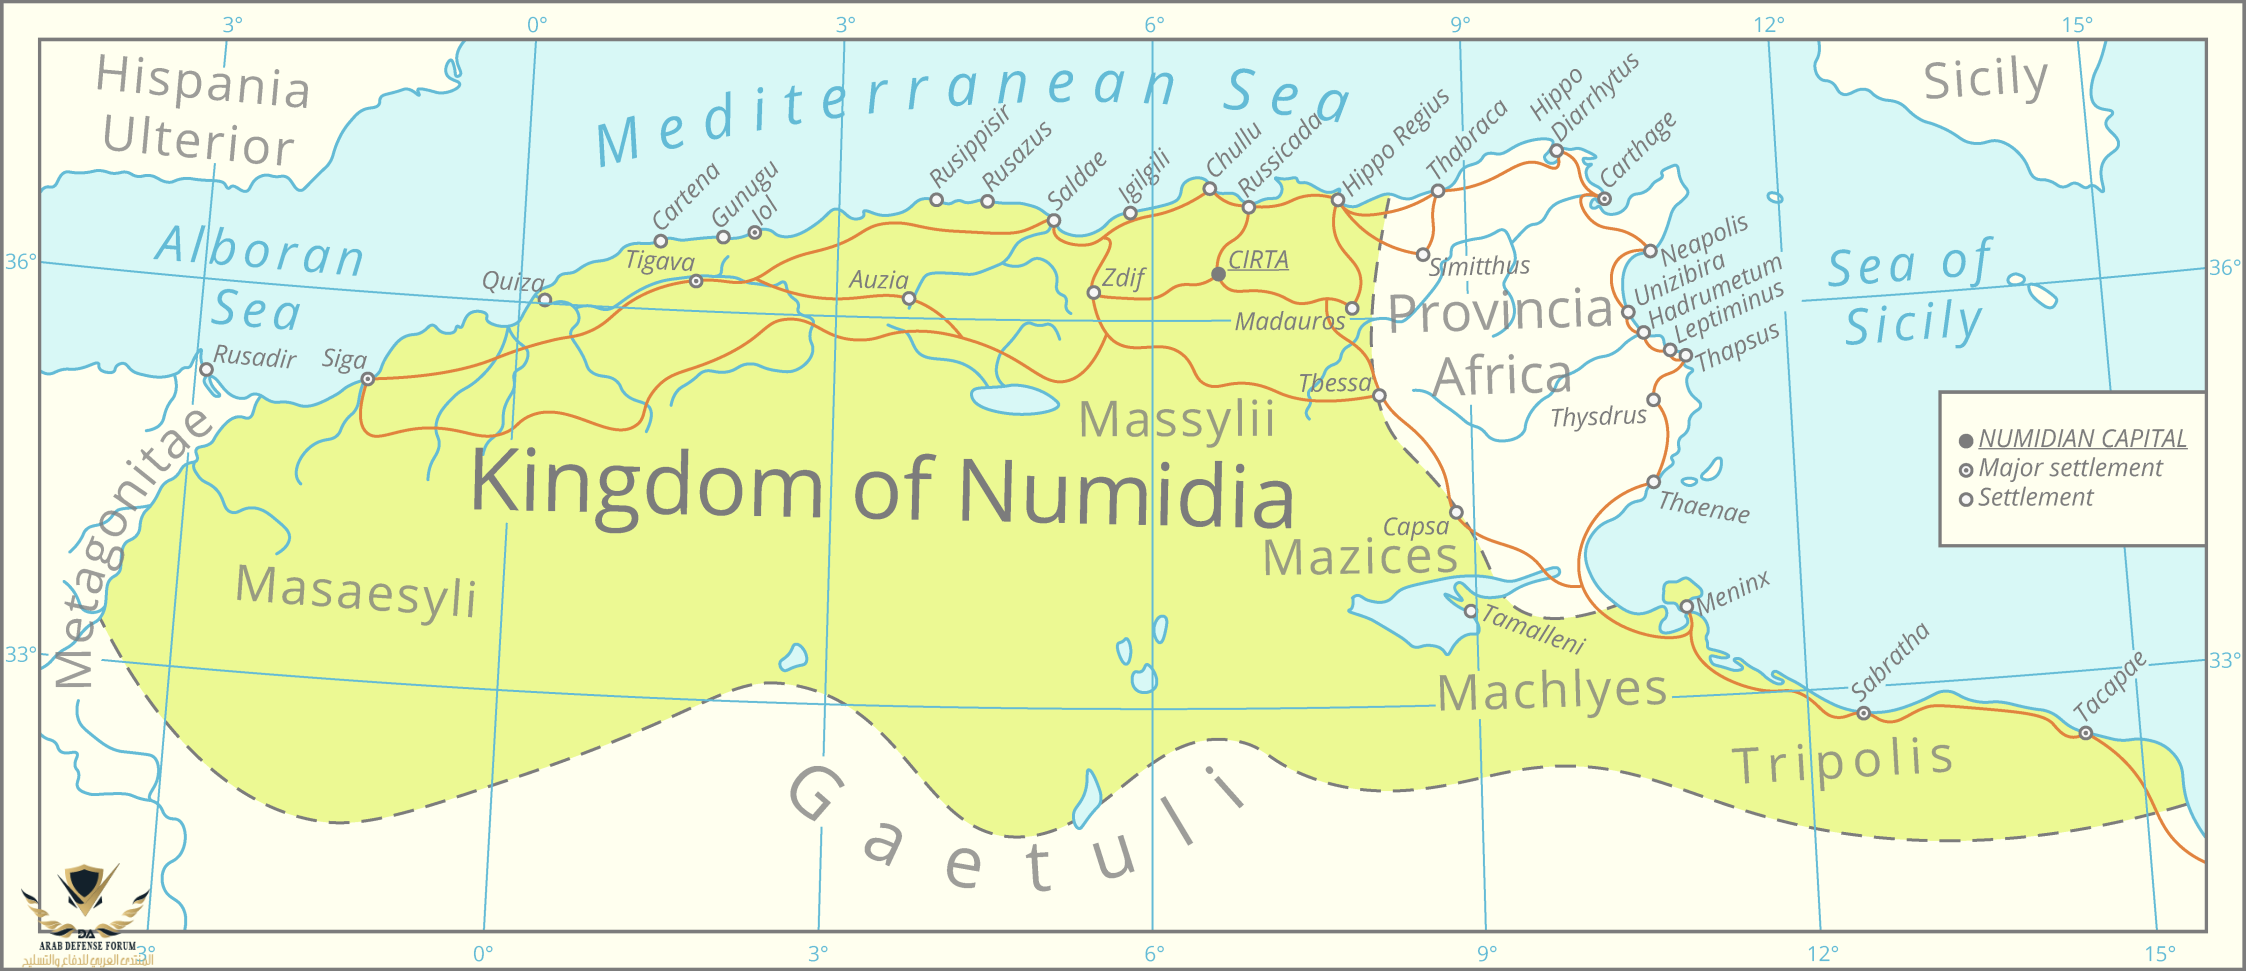 Kingdom_of_Numidia-02.png